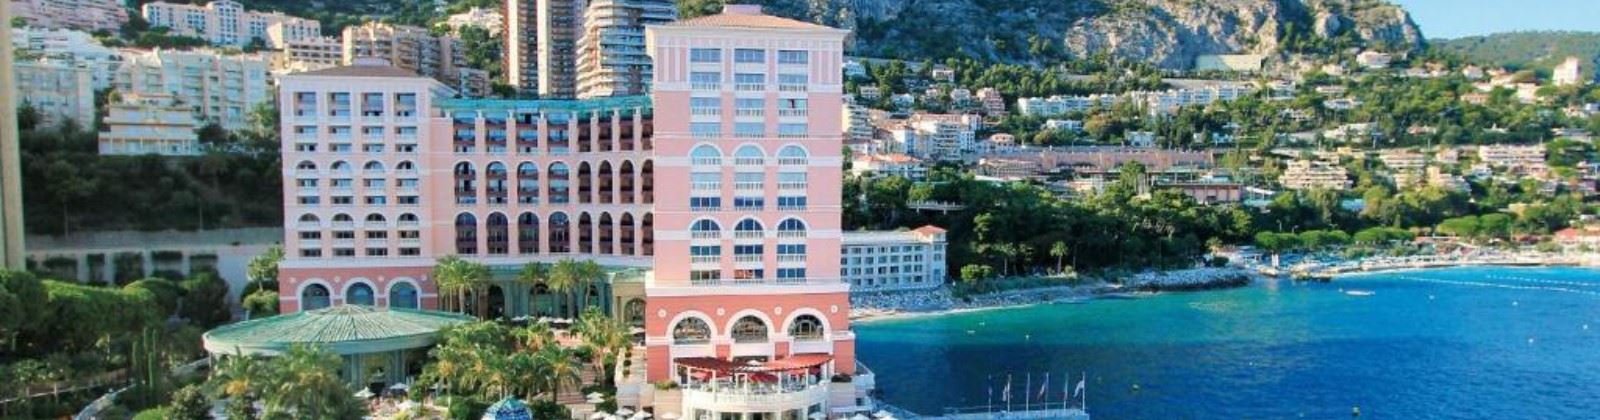 OLEVENE image - monte-carlo-bay-hotel-et-resort-monaco-olevene-restaurant-seminaire-booking-